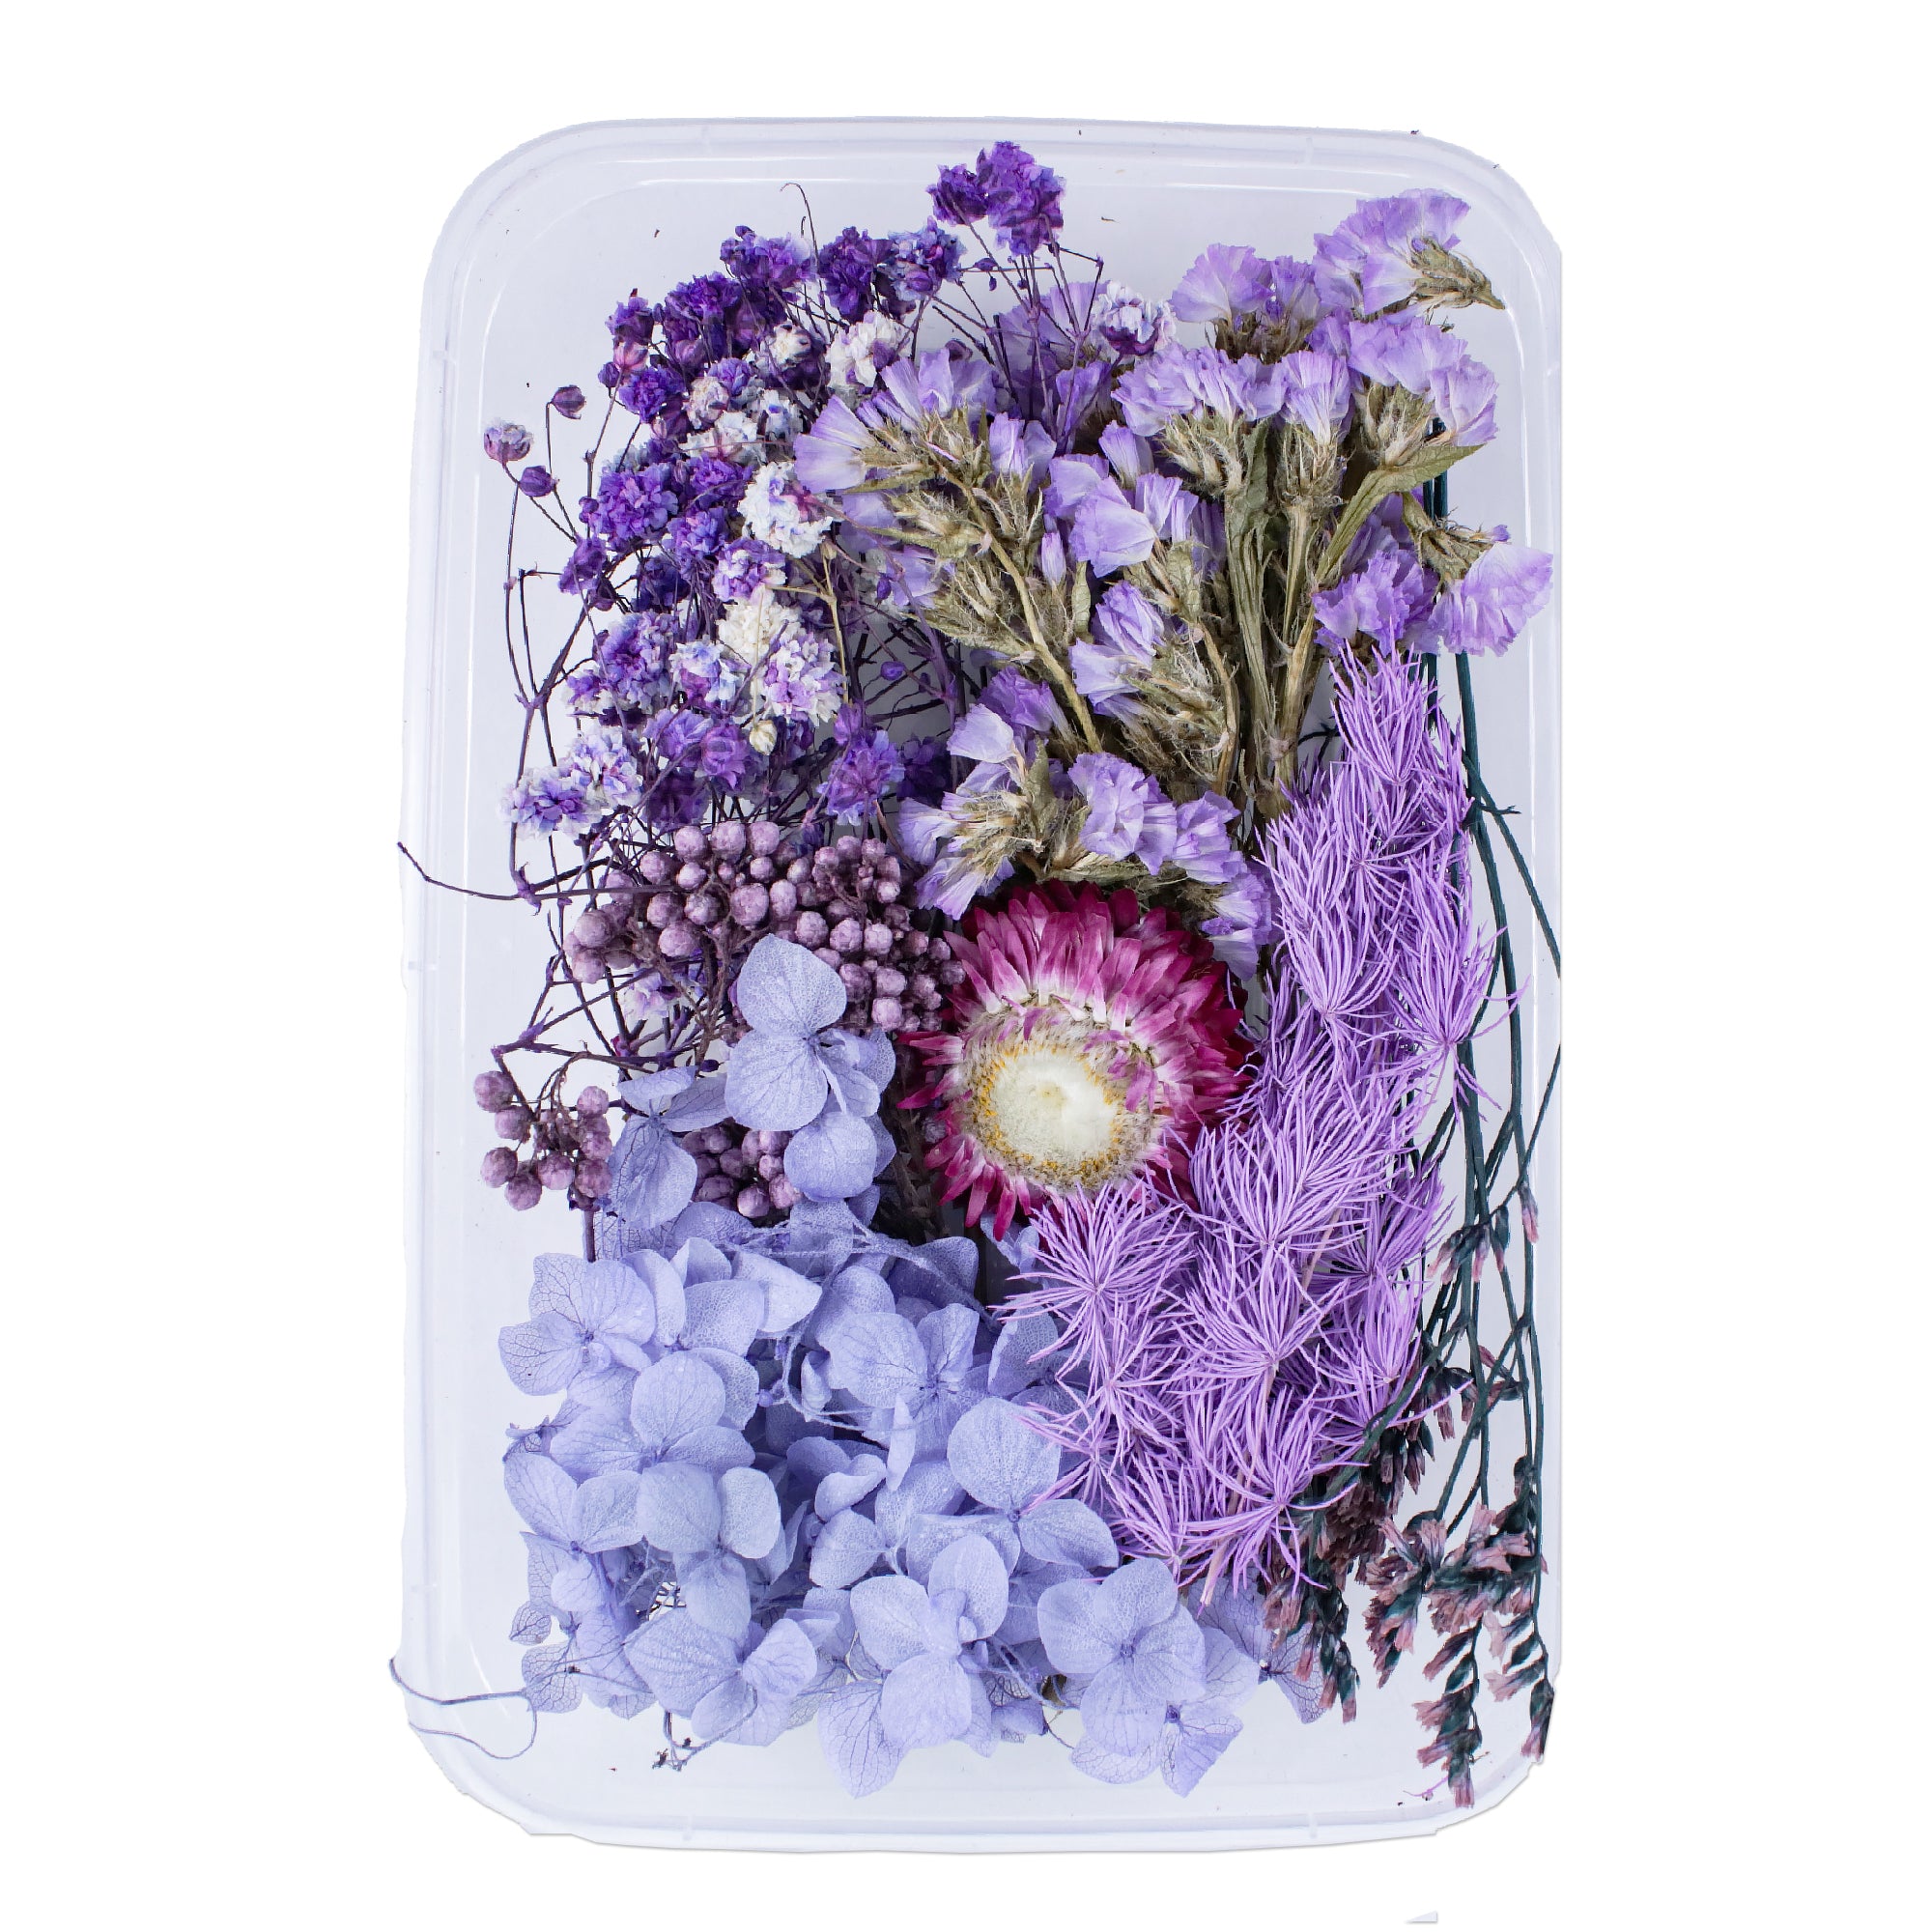 Resin Art Natural Dried Flowers Blossom Beauty 1 Box Ib